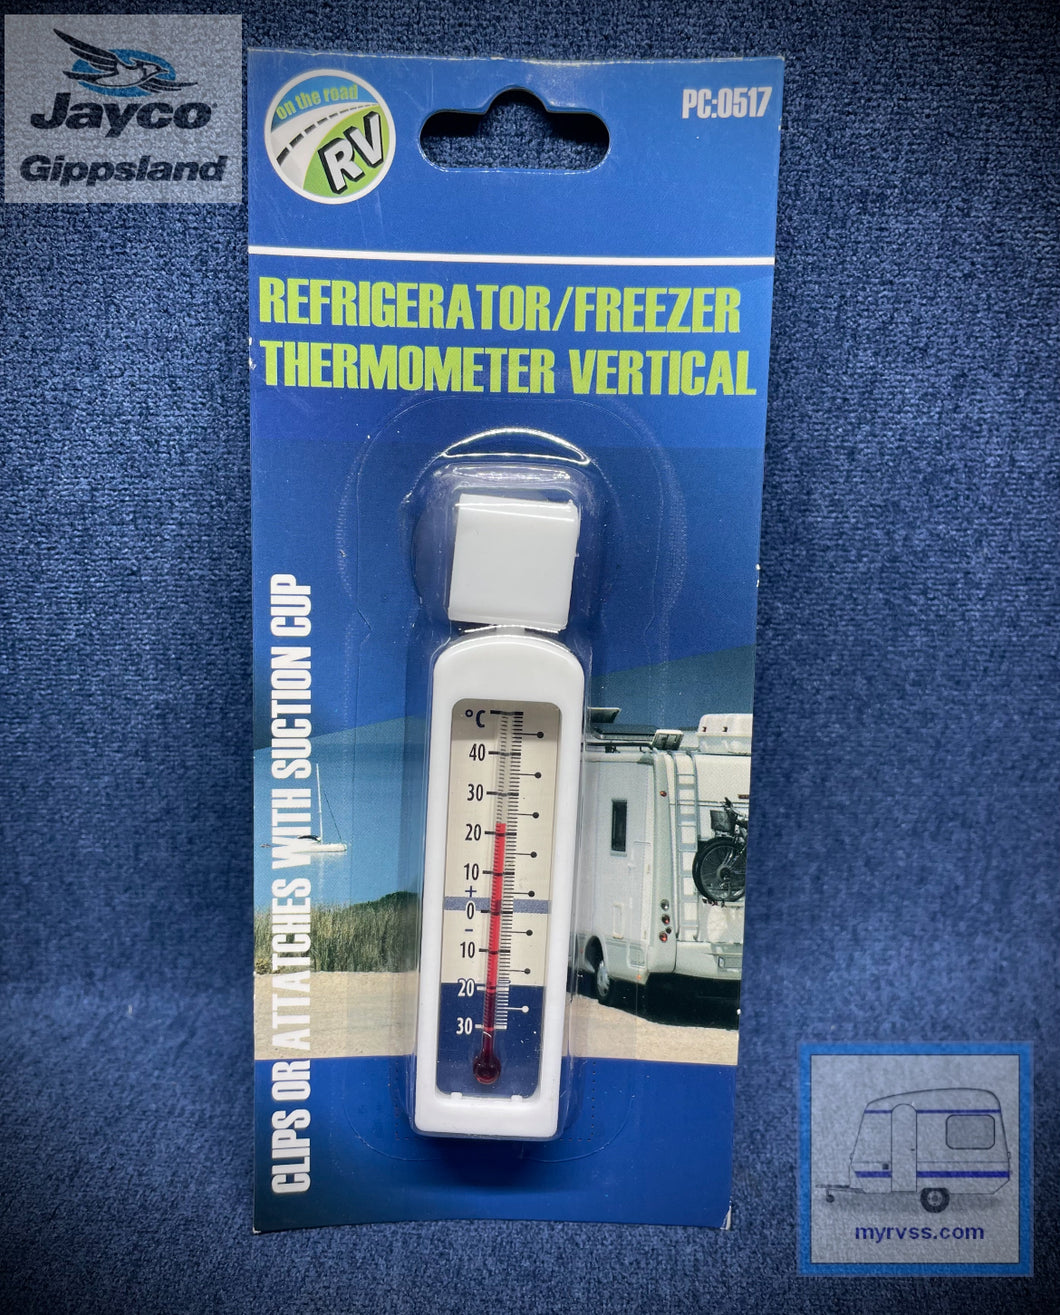 RV Refrigerator/Freezer Verticle Thermometer